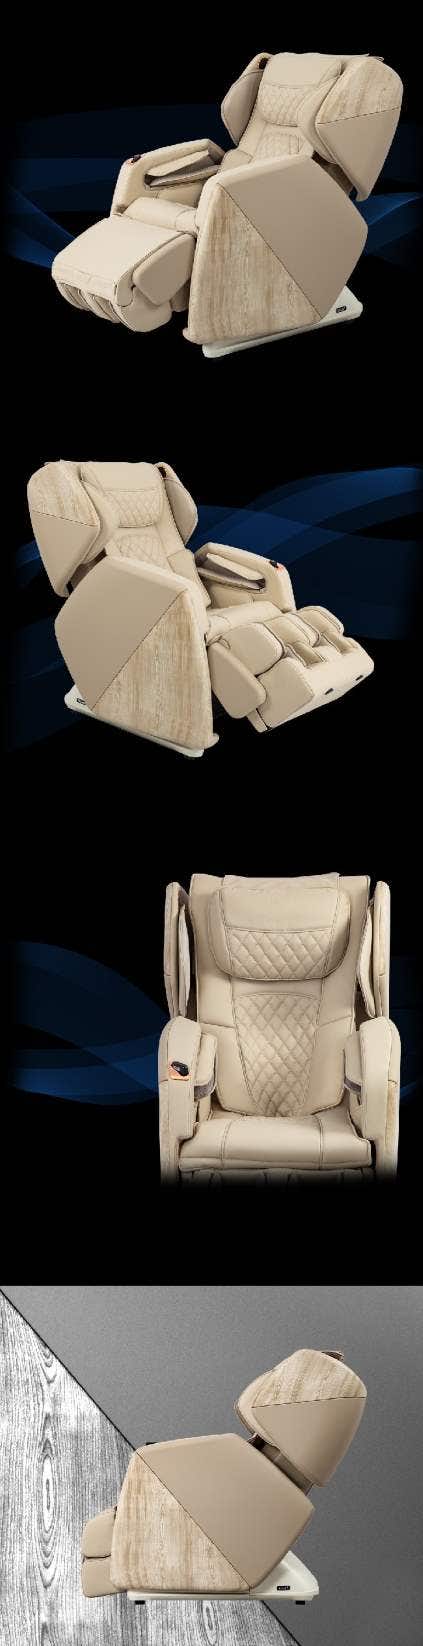 Osaki OS-Pro SOHO Massage Chair